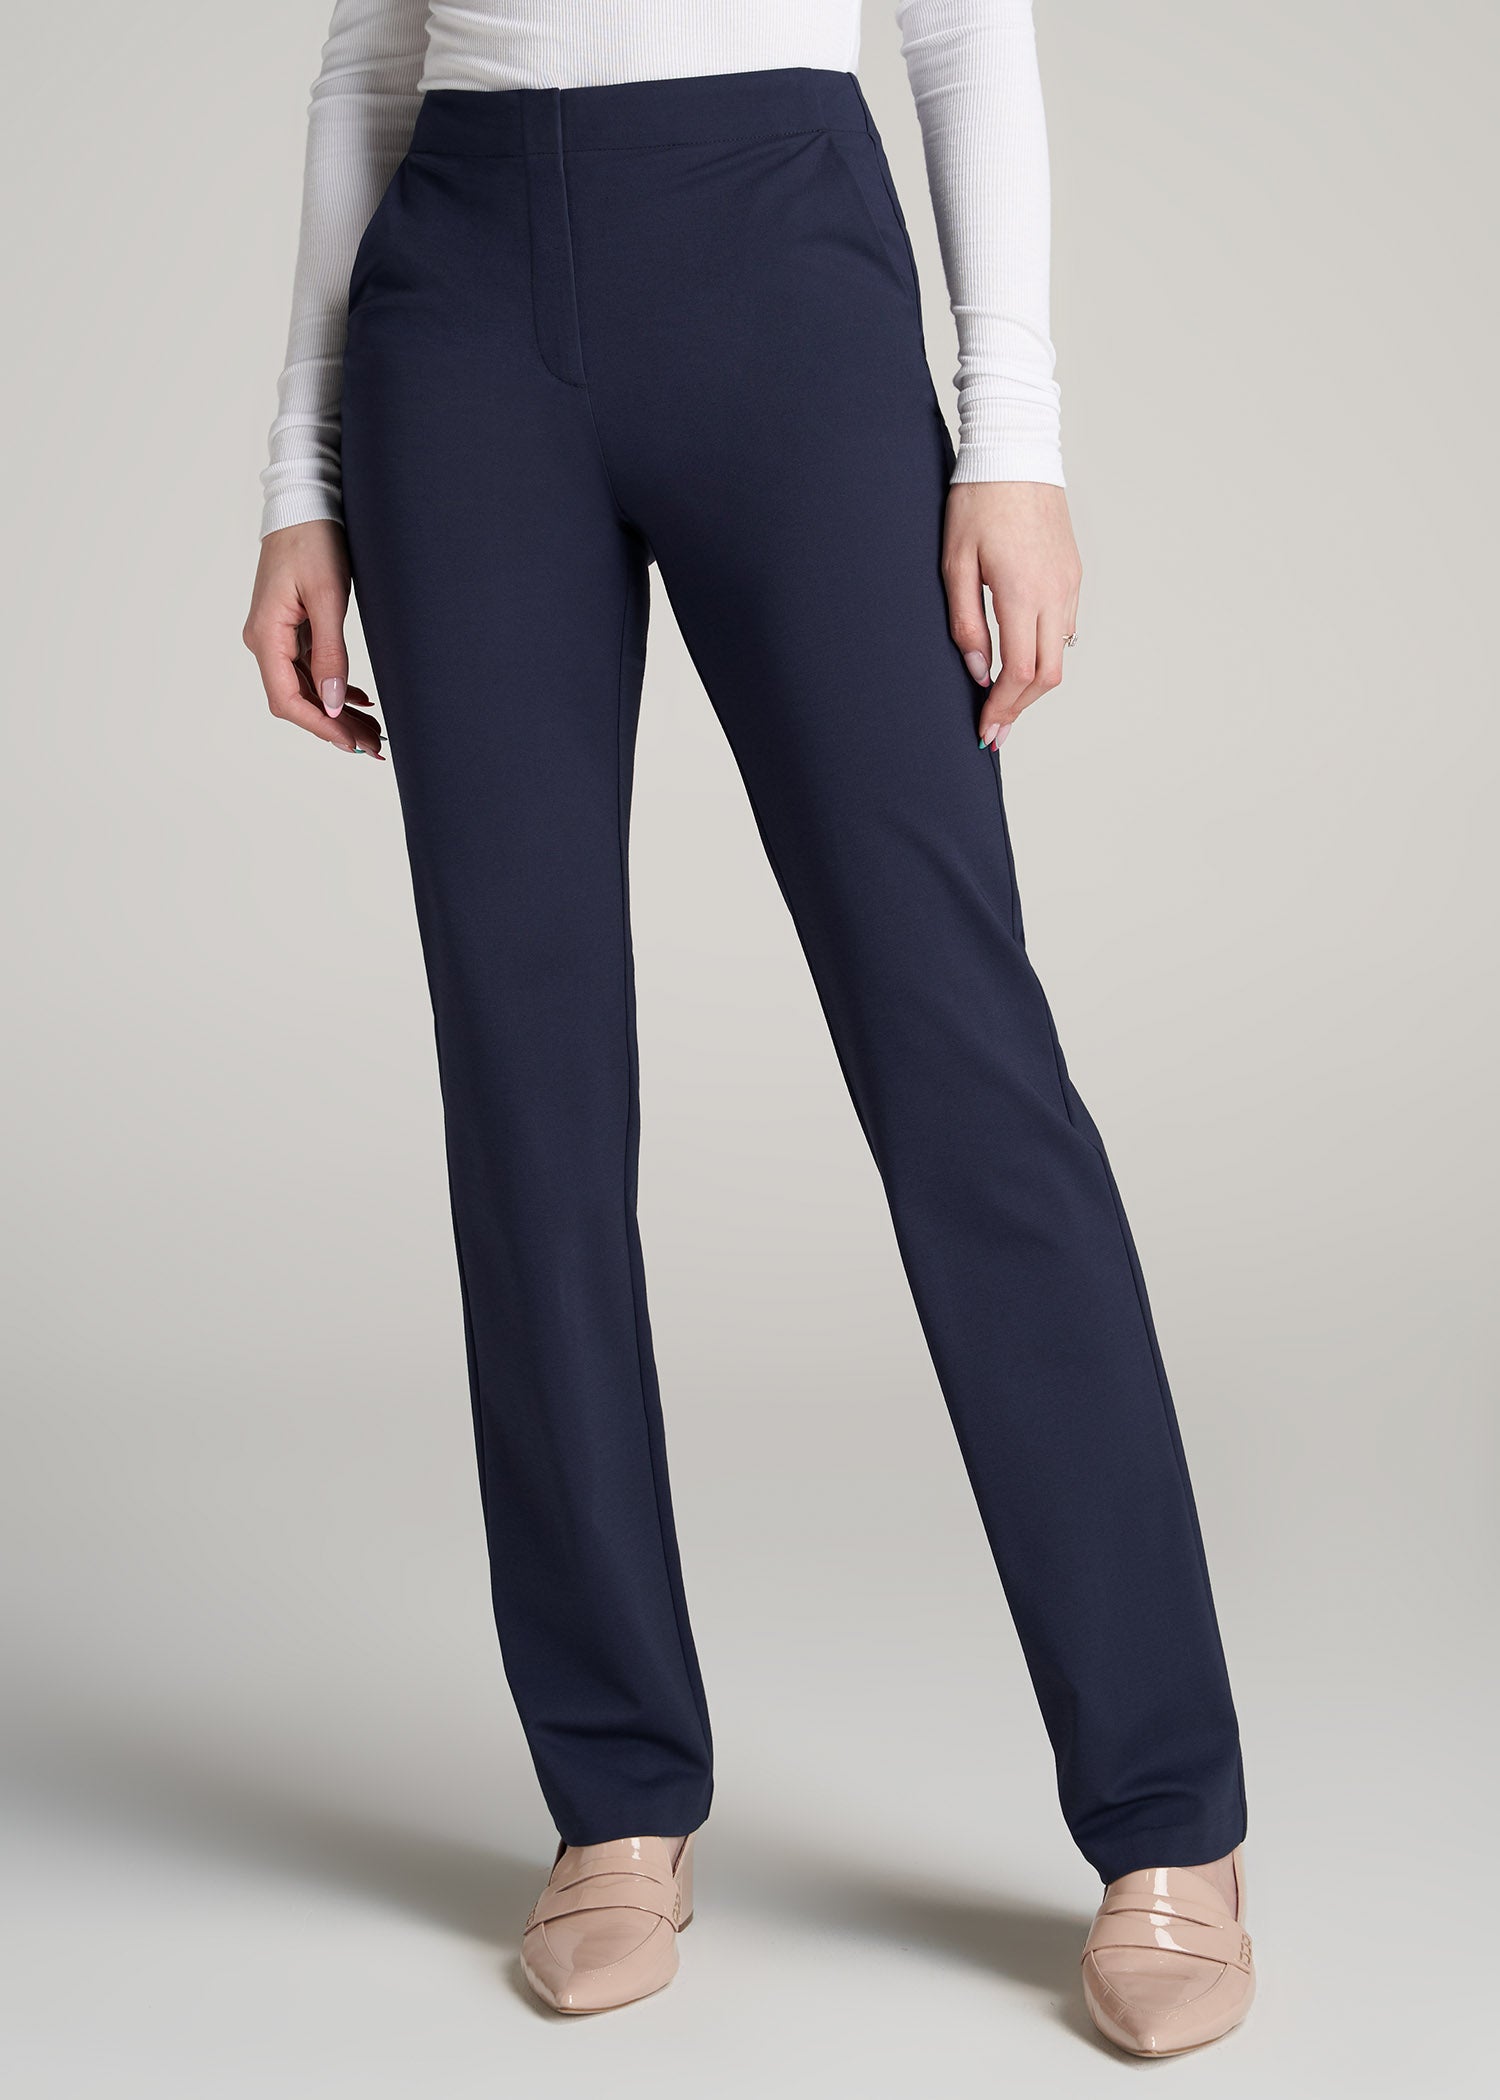 Slacks for Women: Tall lady Straight Leg Navy Pants